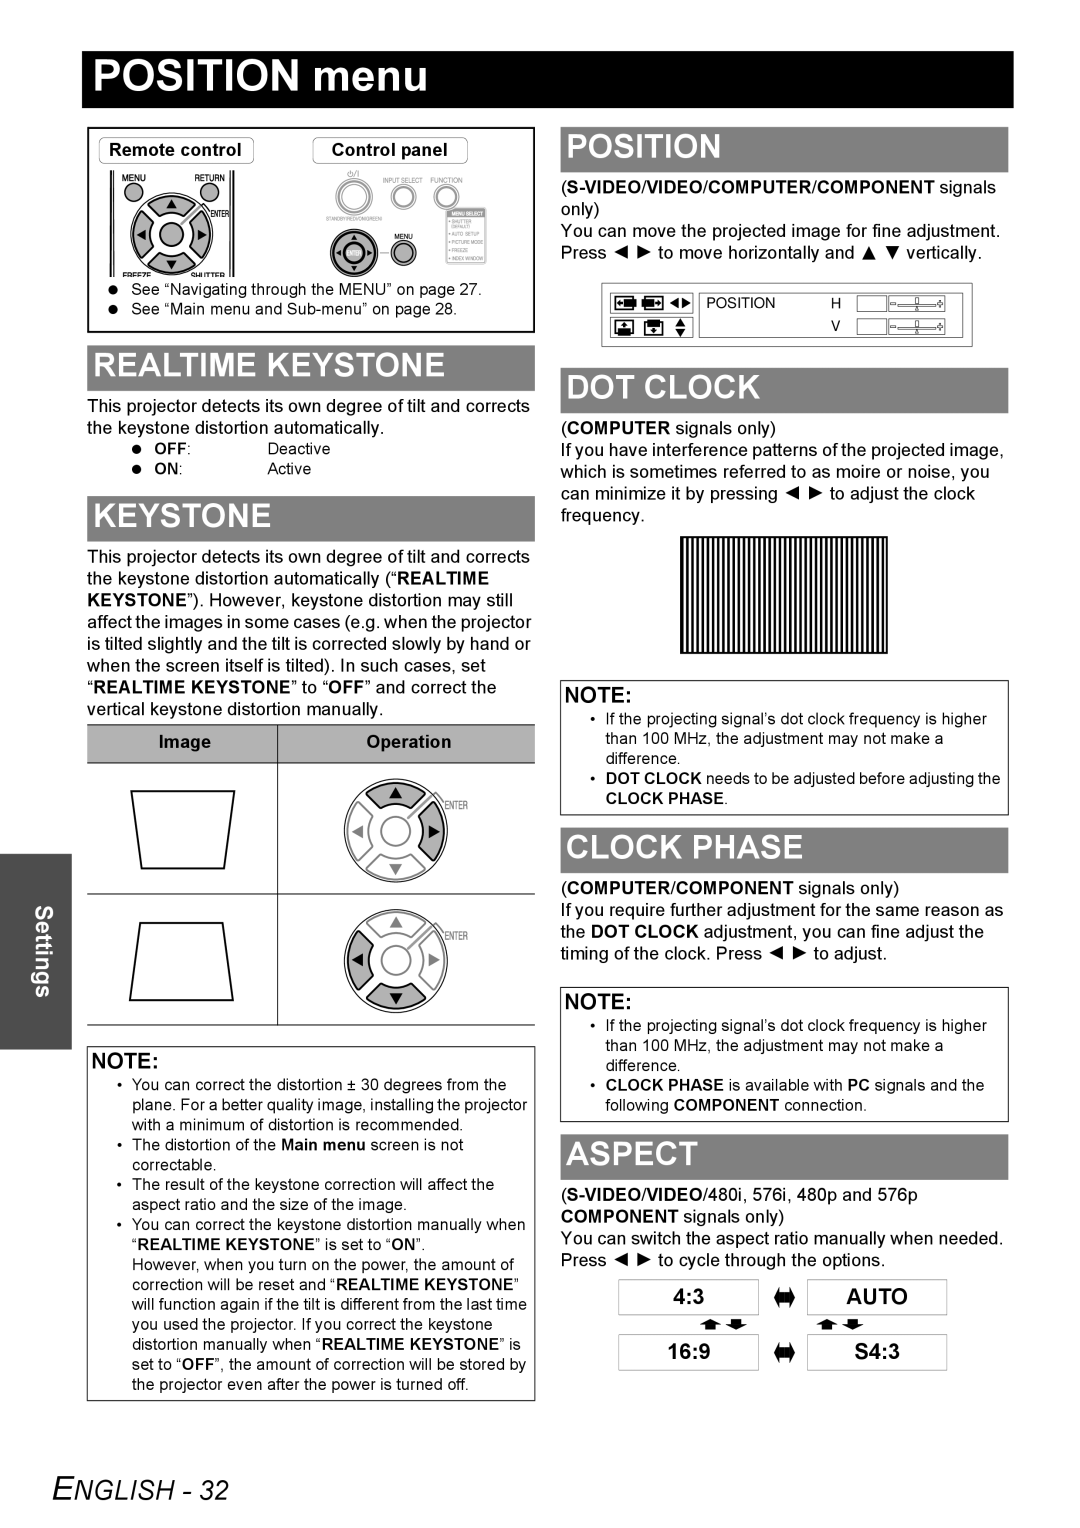 Panasonic PT-LB51NTU POSITION menu, Realtime Keystone, Position, Dot Clock, Clock Phase, Aspect, English, Settings, Auto 